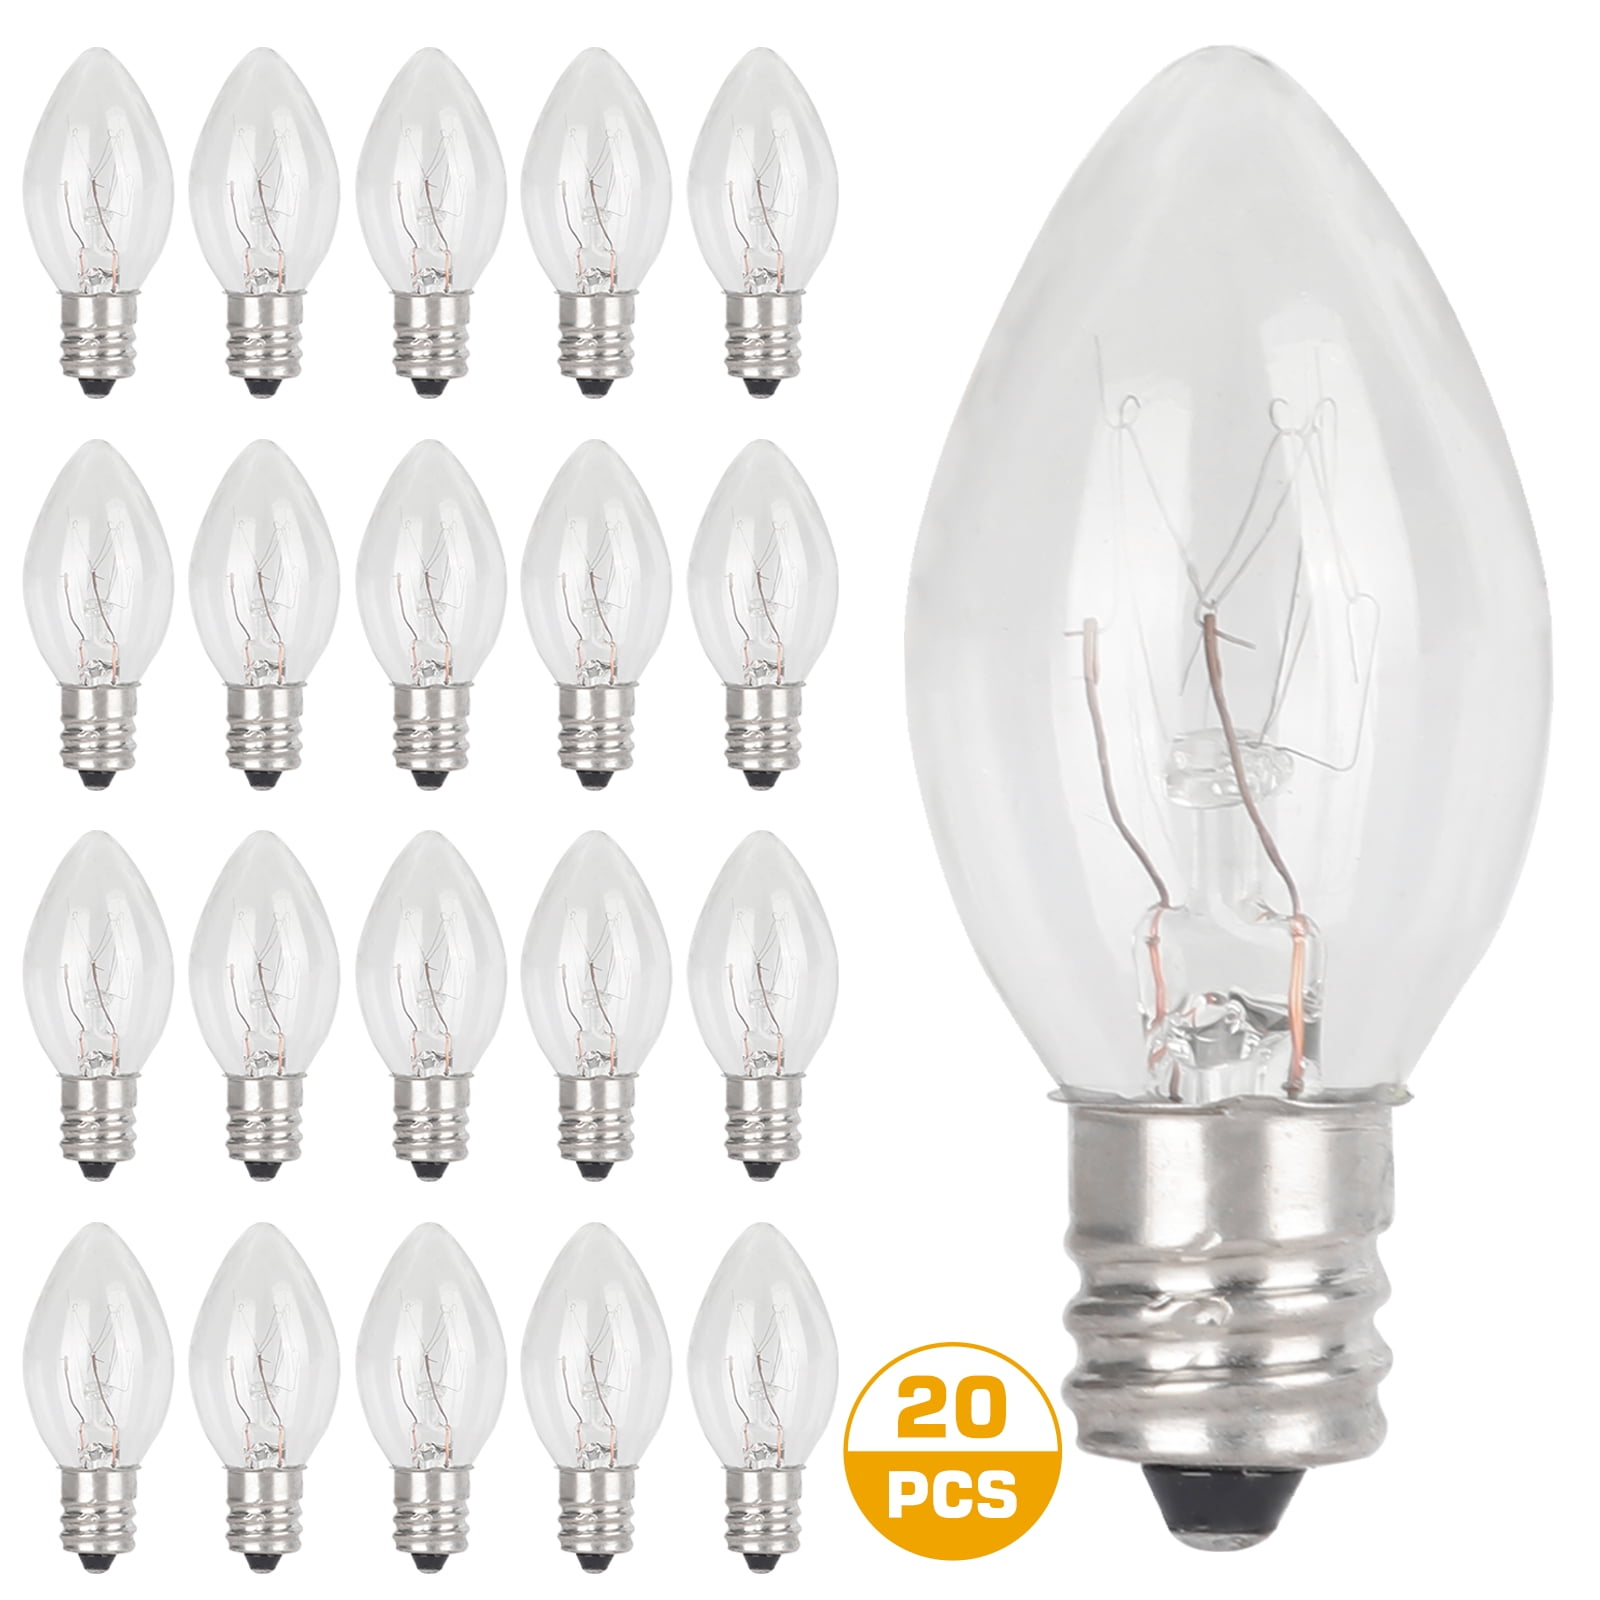 110V AC 5W Warm White LED E12 Base Candelabra Candle Light Bulbs 